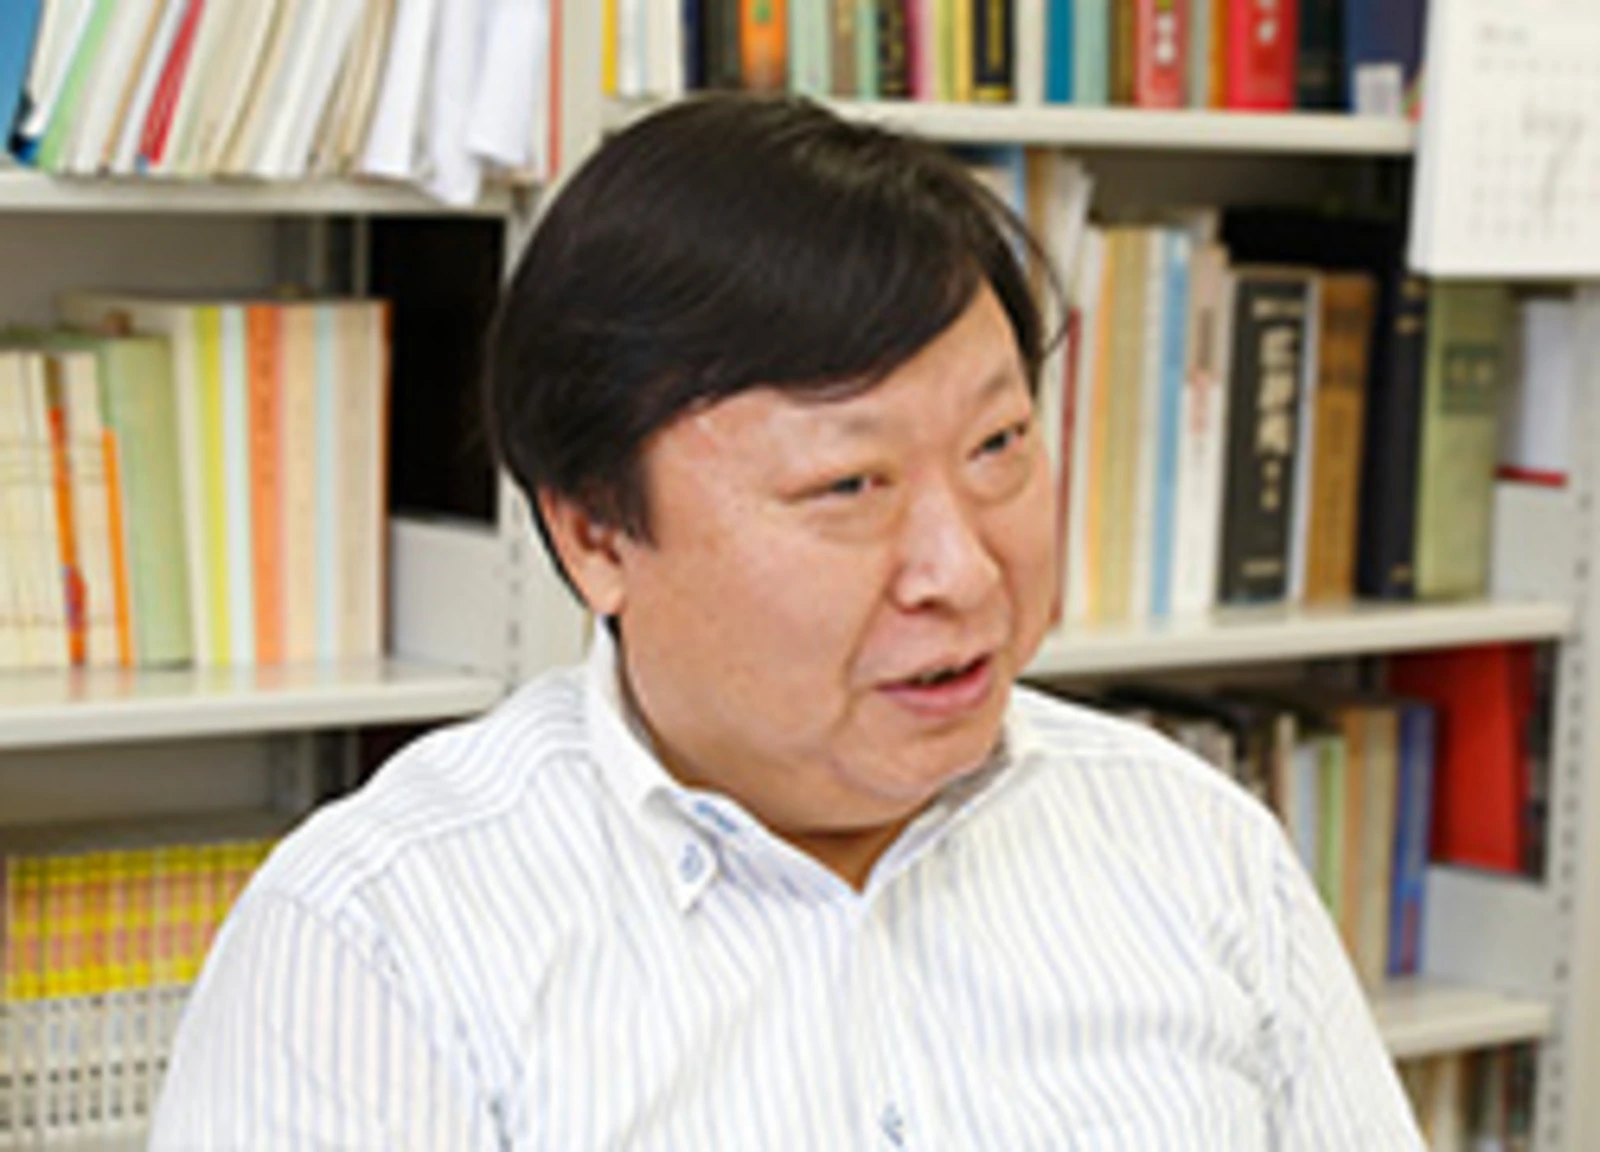 Human Rights in China / Chinese professor at Japan university missing after visiting homeland